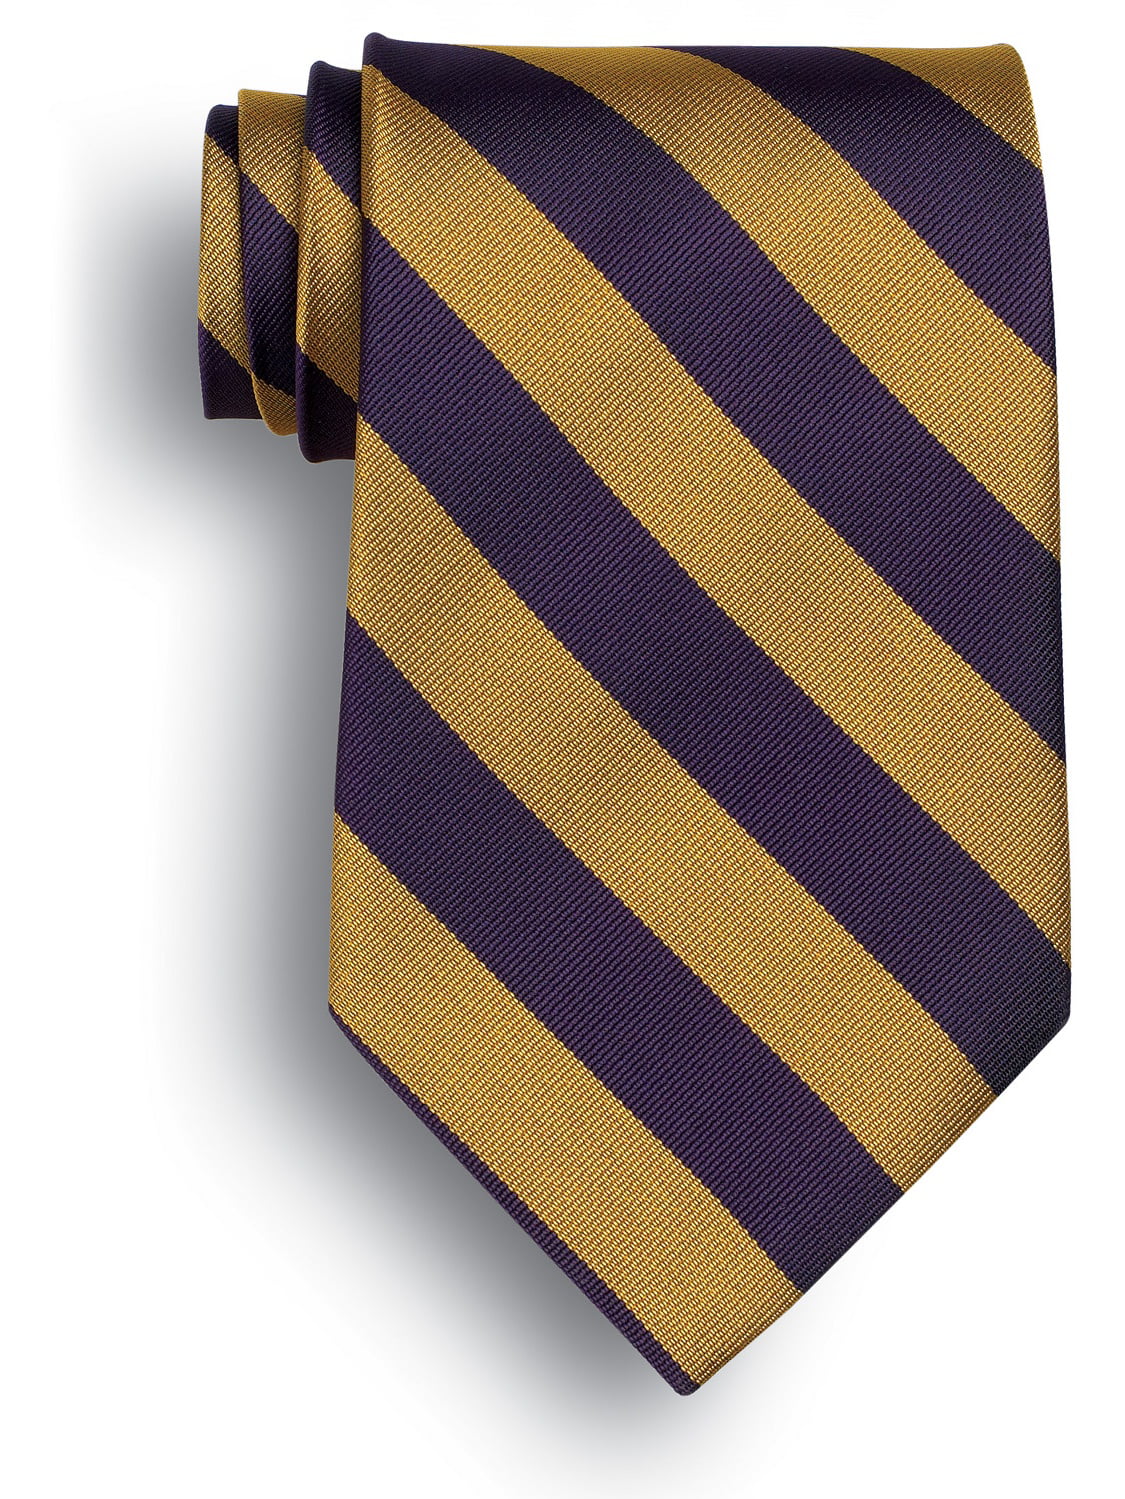 Wolfmark School Stripe Tie, Purple and Gold - Walmart.com